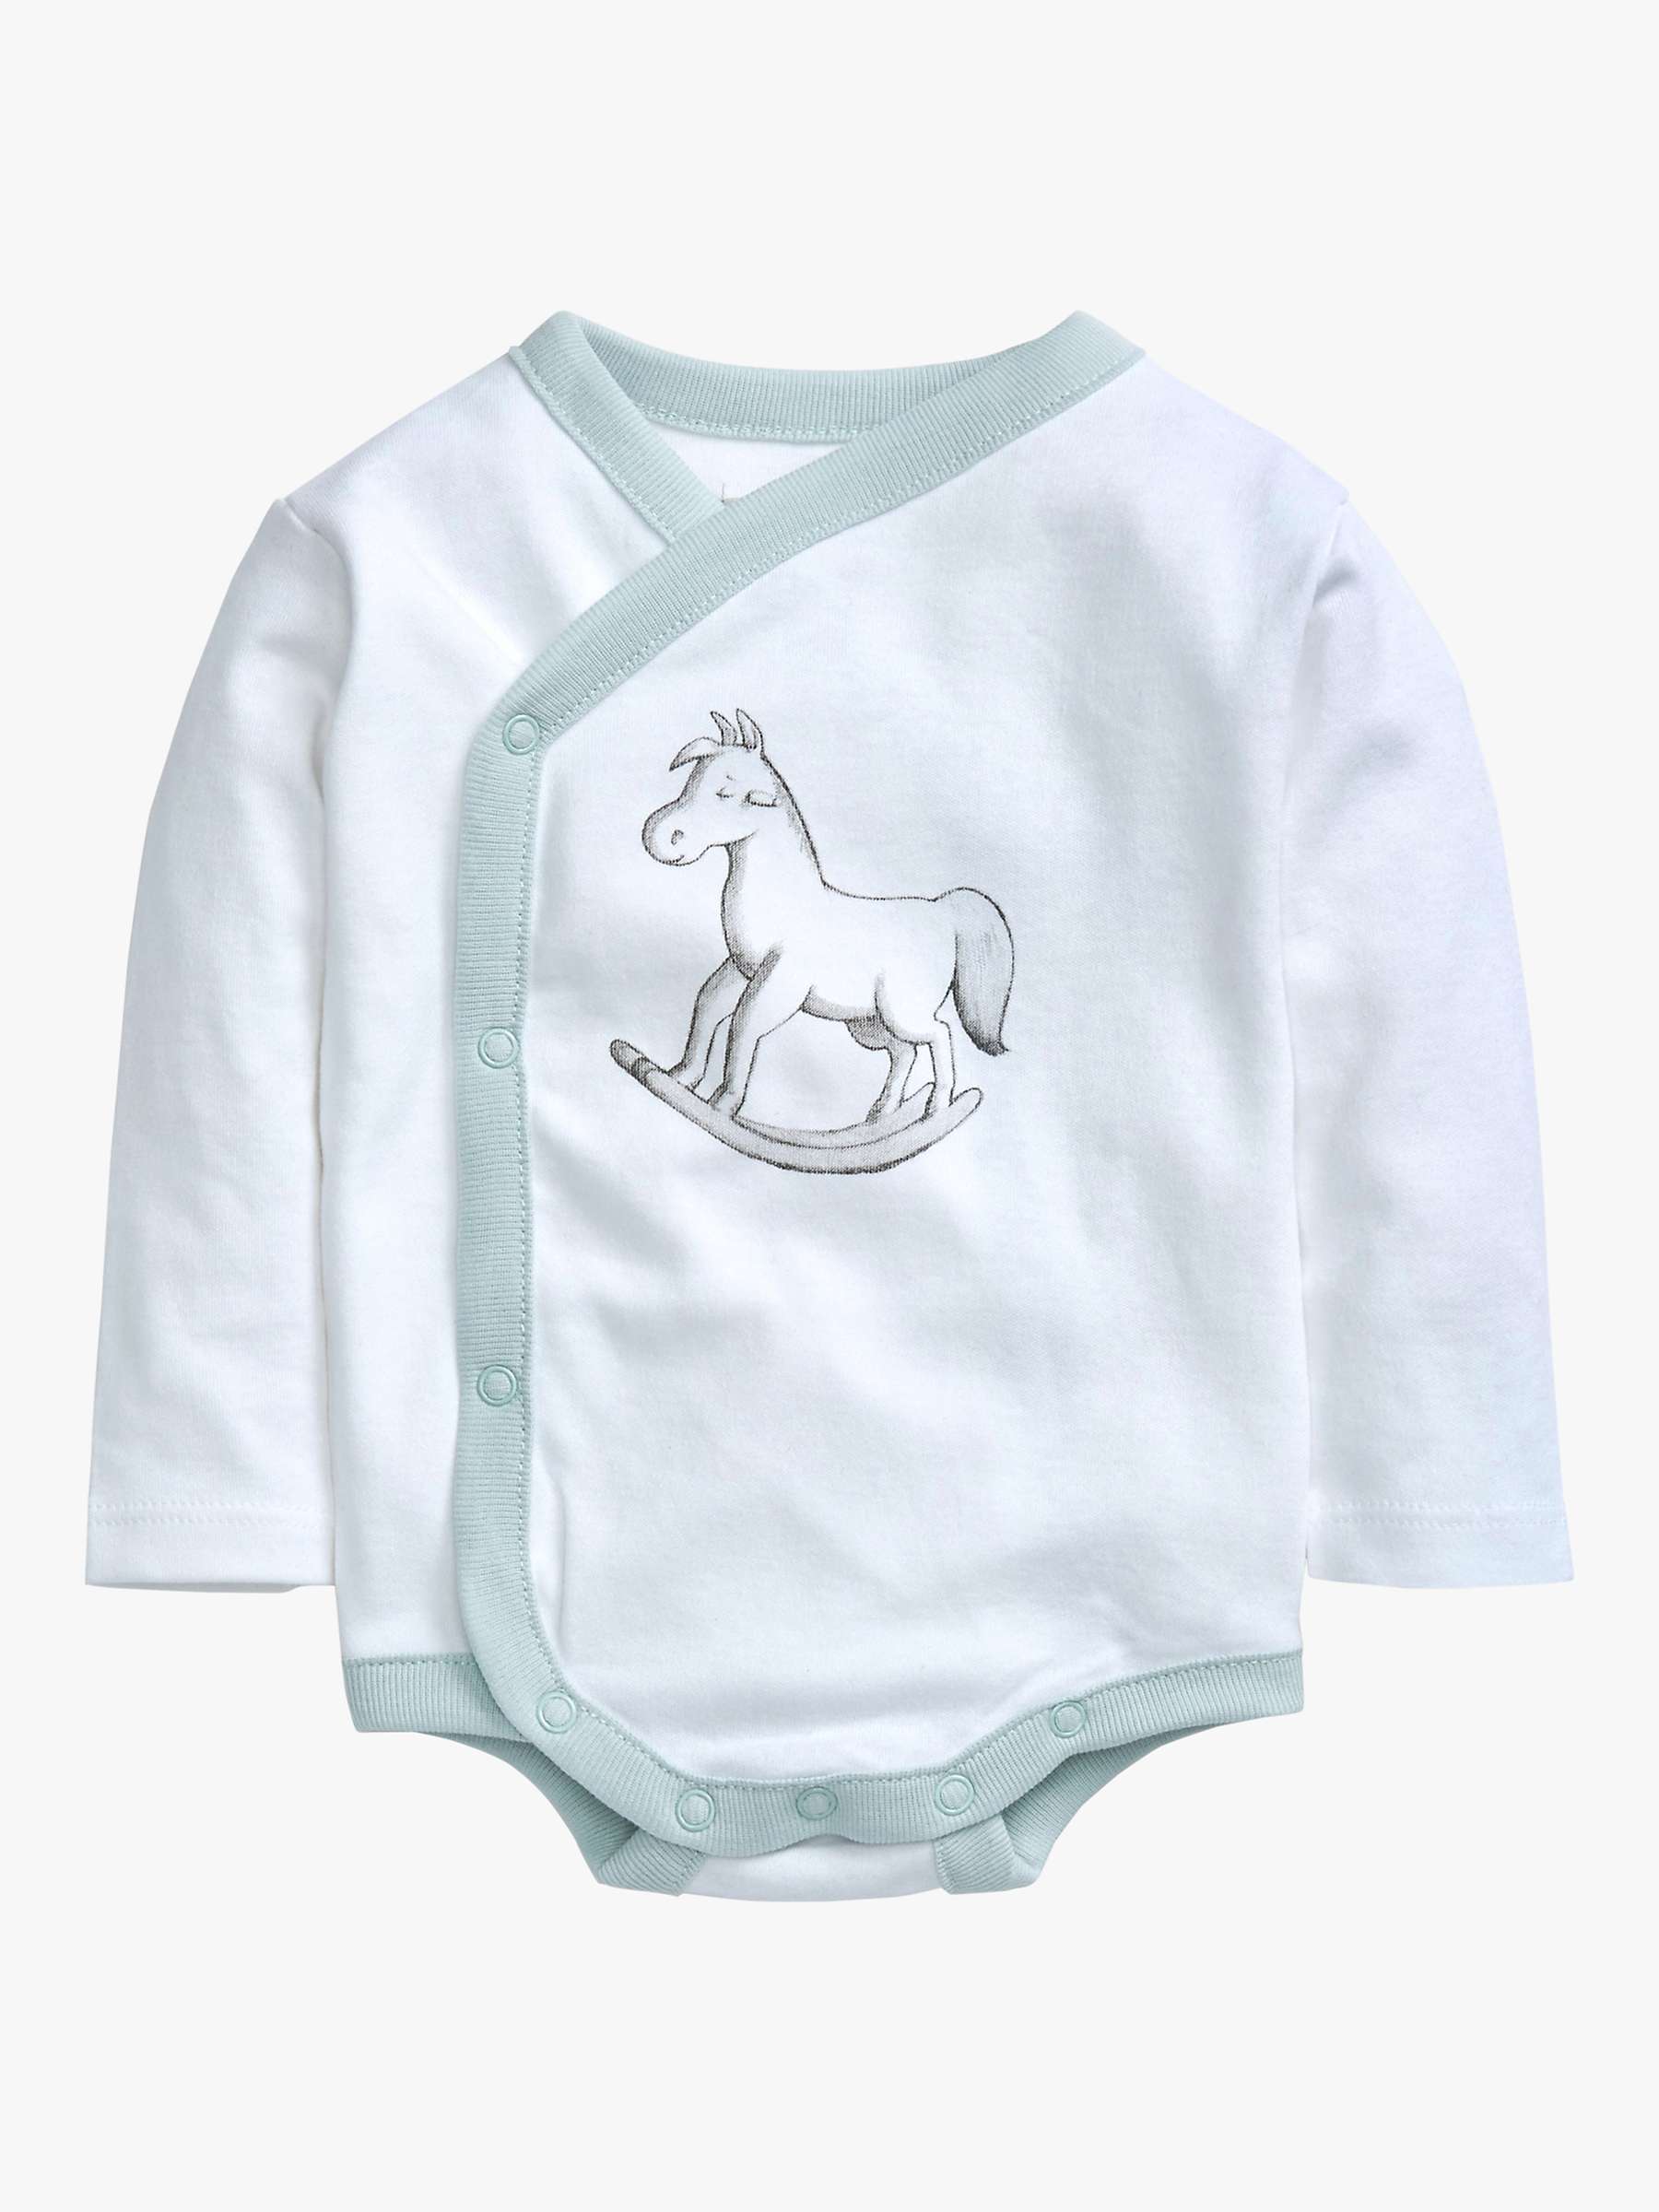 Buy The Little Tailor 7 Piece Clothing, Booties, Blanket, Bib & Comforter Baby Gift Set Online at johnlewis.com